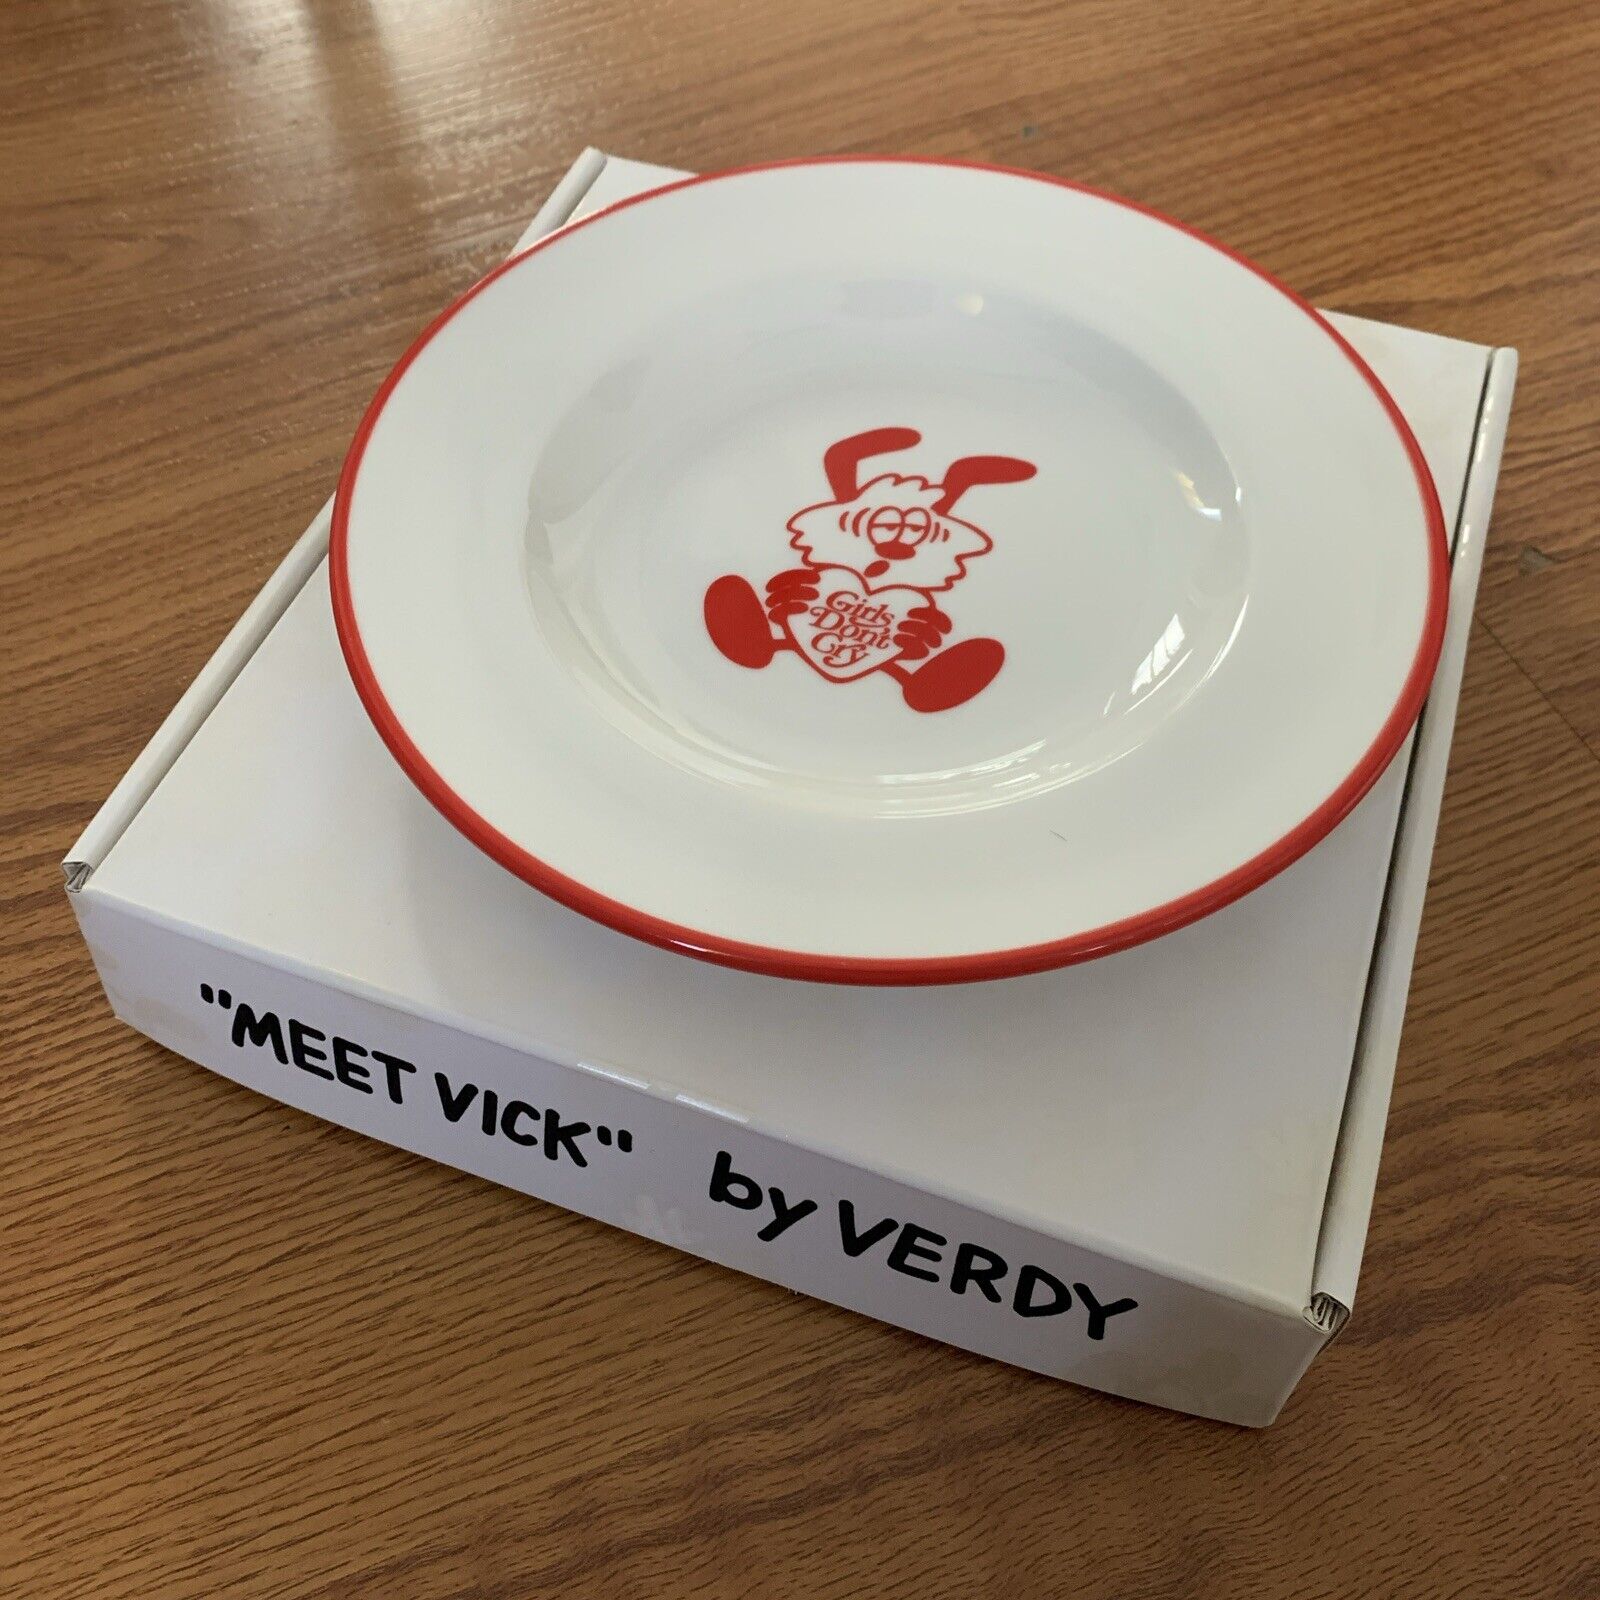 NIB Meet Vick by Verdy Girls Dont Cry Plate Bowl White NOS